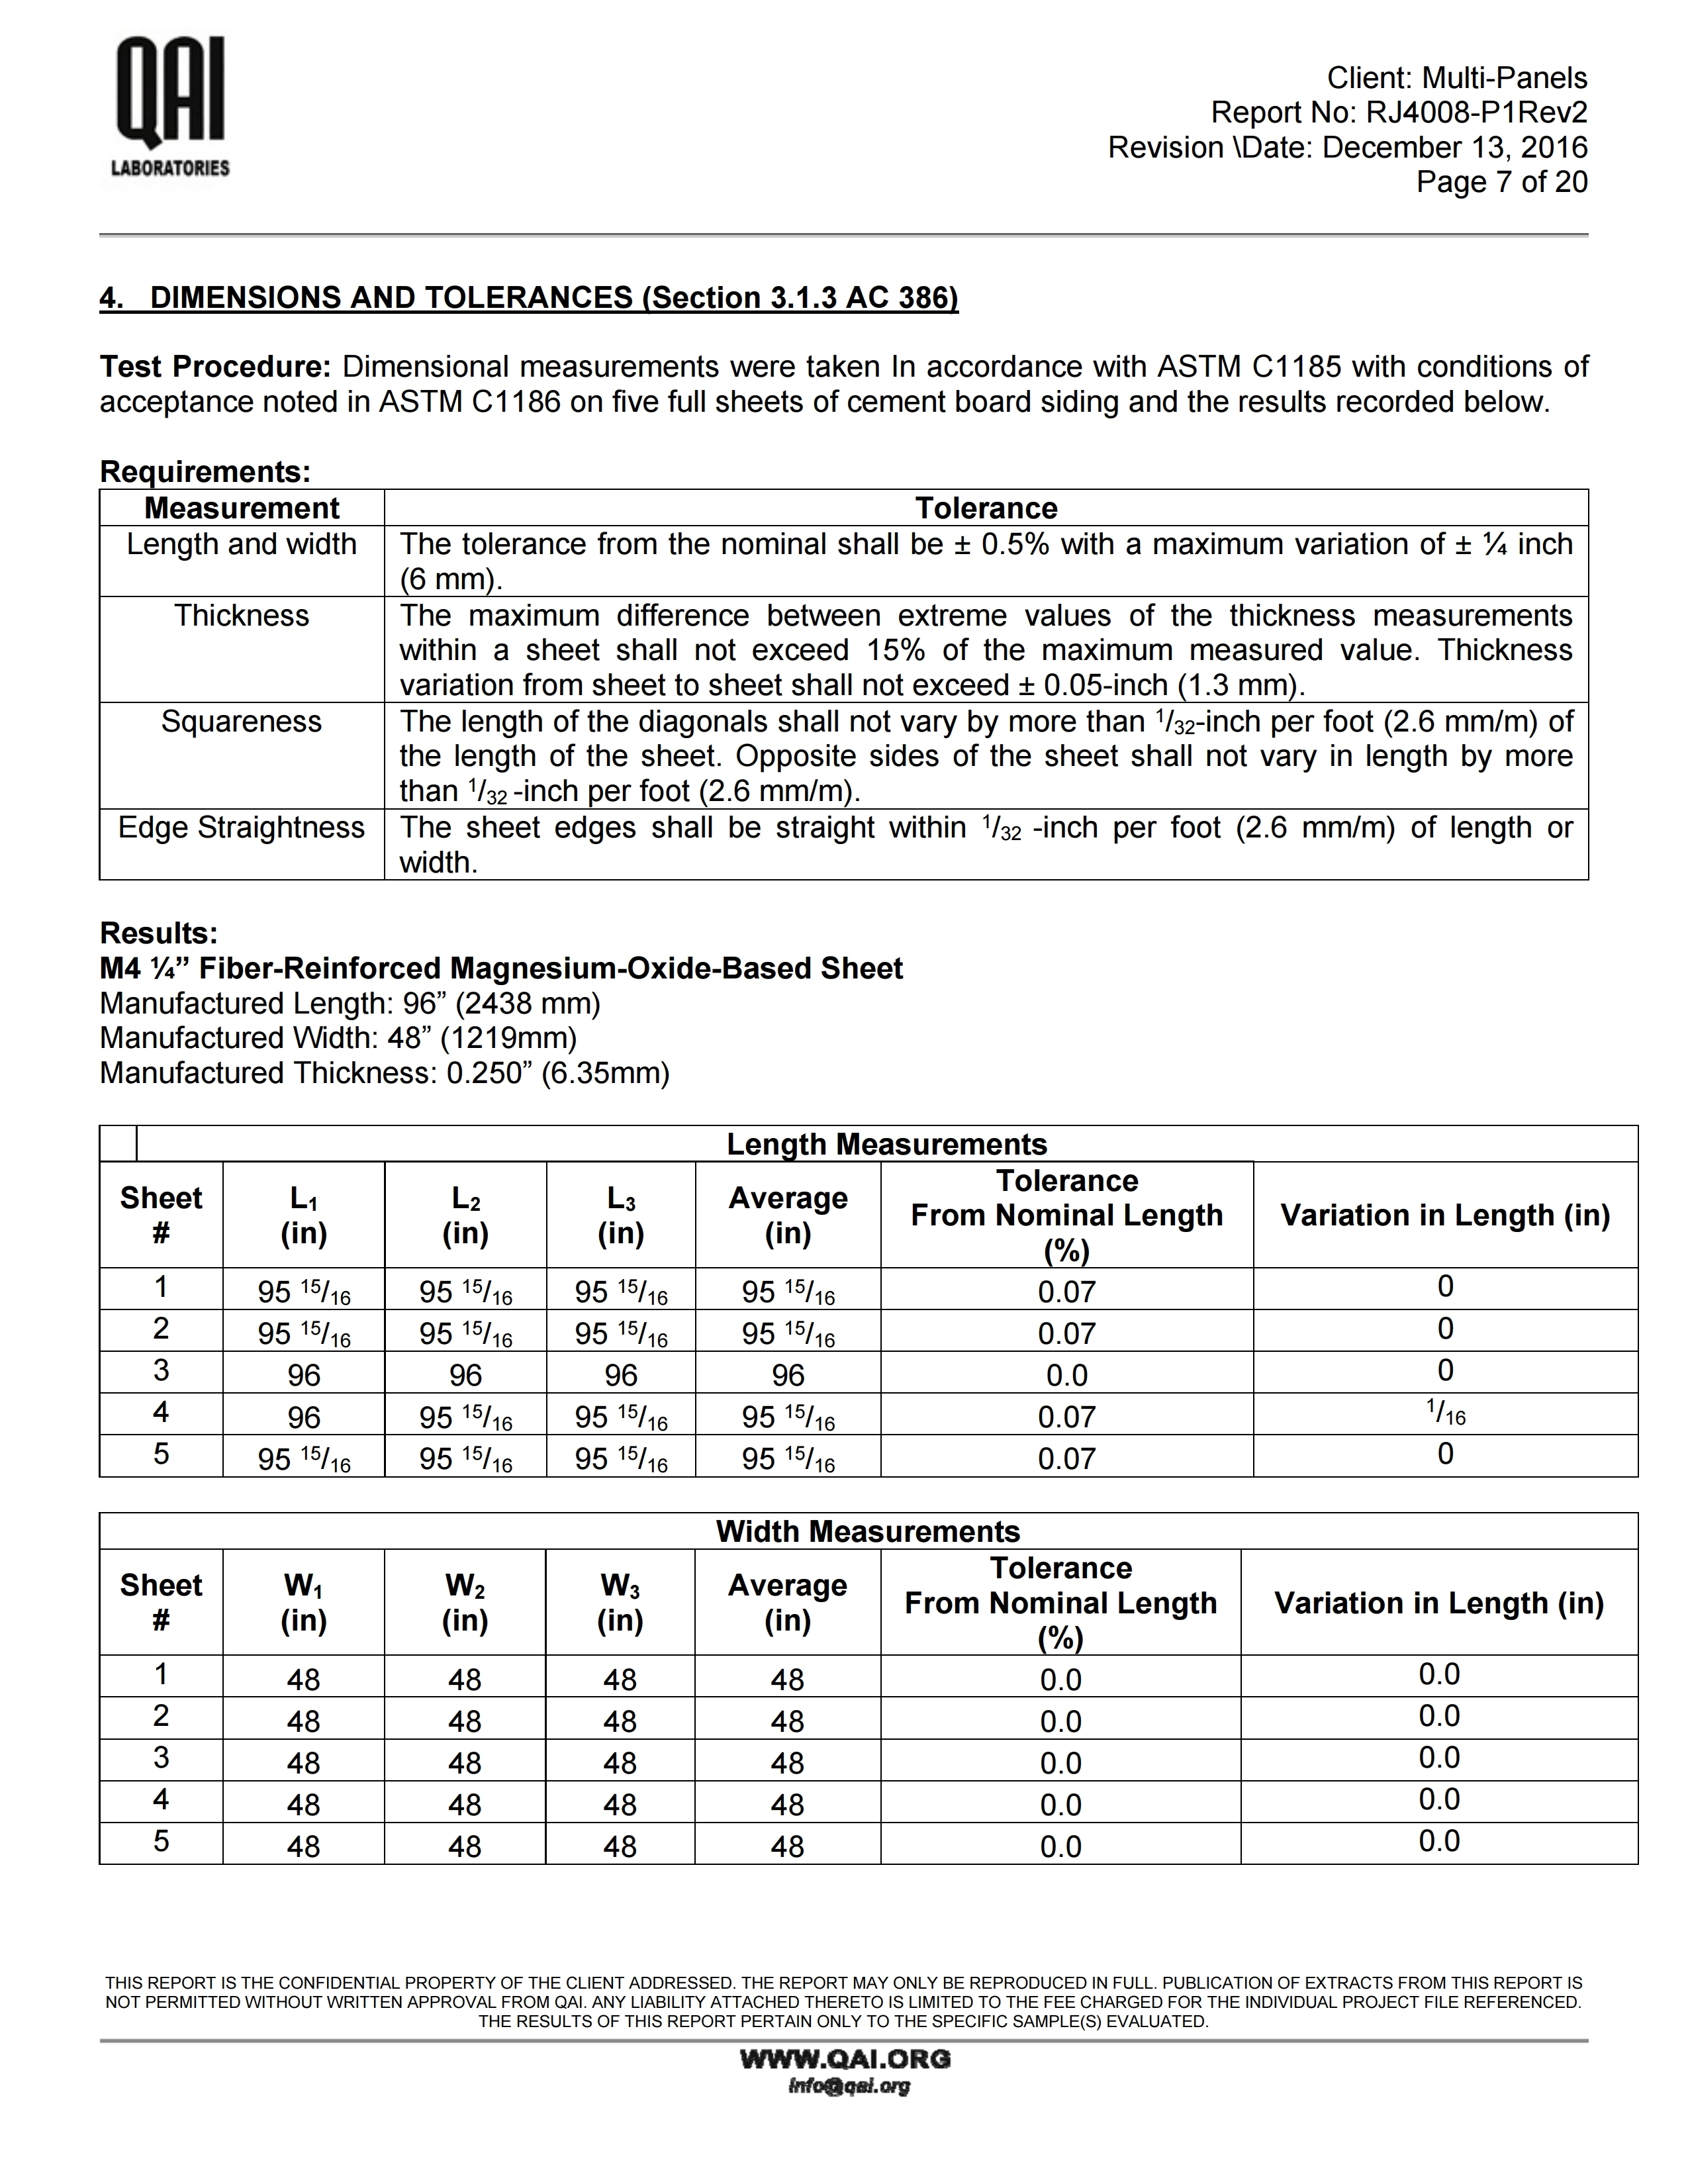 RJ4008-P1REV2-Multi-Panels-M4-AC386 Report-13122016 (2).pdf_page_07.jpg